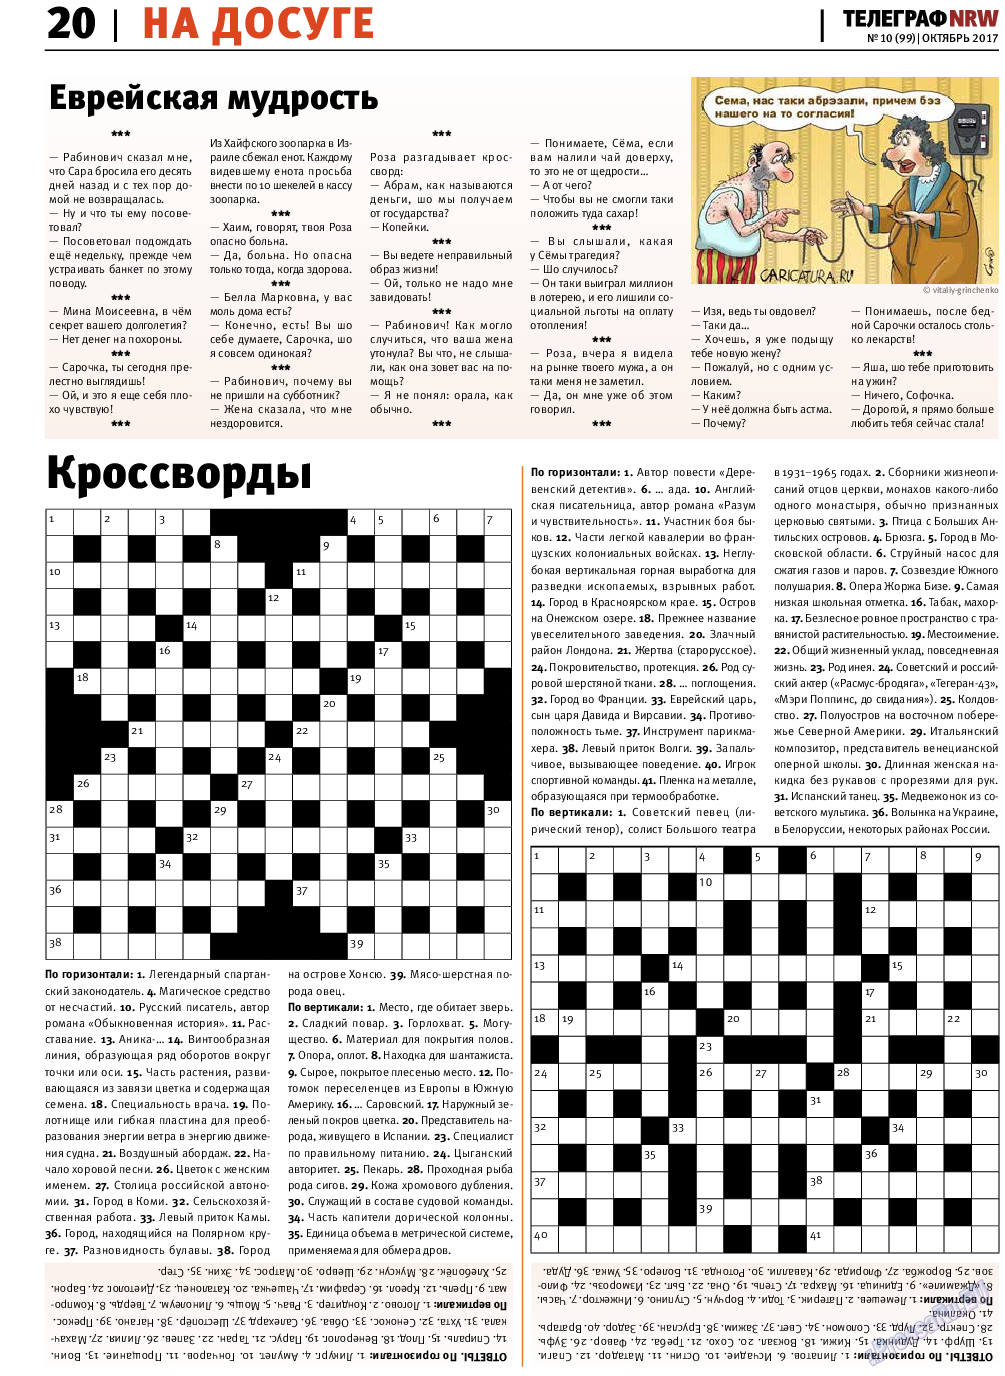 Телеграф NRW, газета. 2017 №10 стр.20